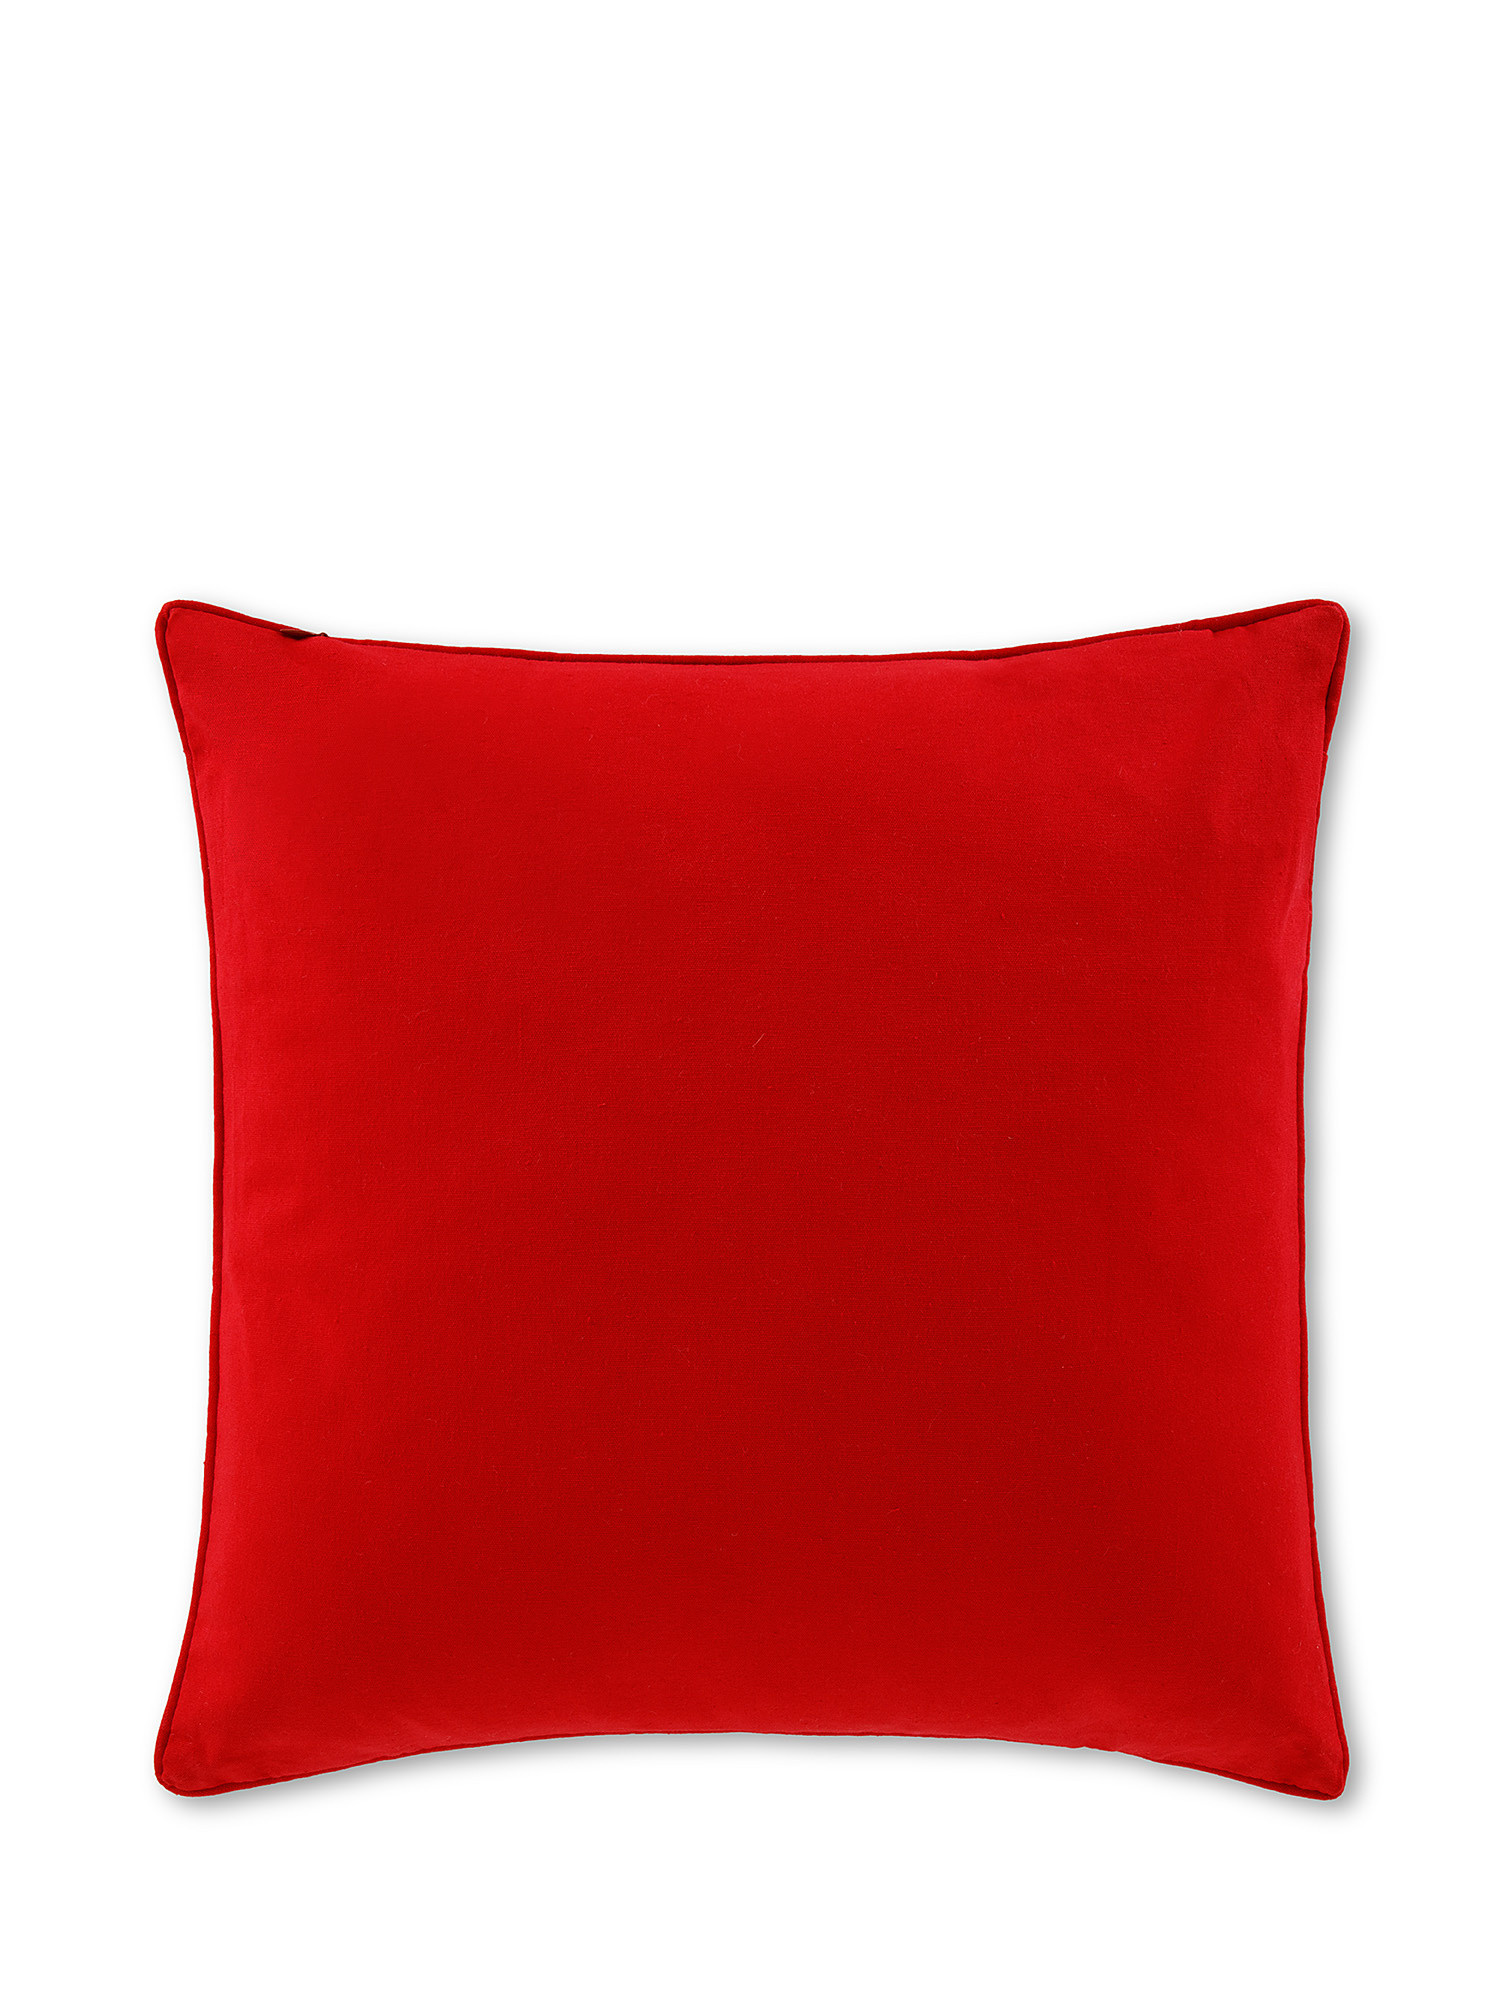 Cuscino ricamo granchio 45x45cm, Rosso, large image number 1